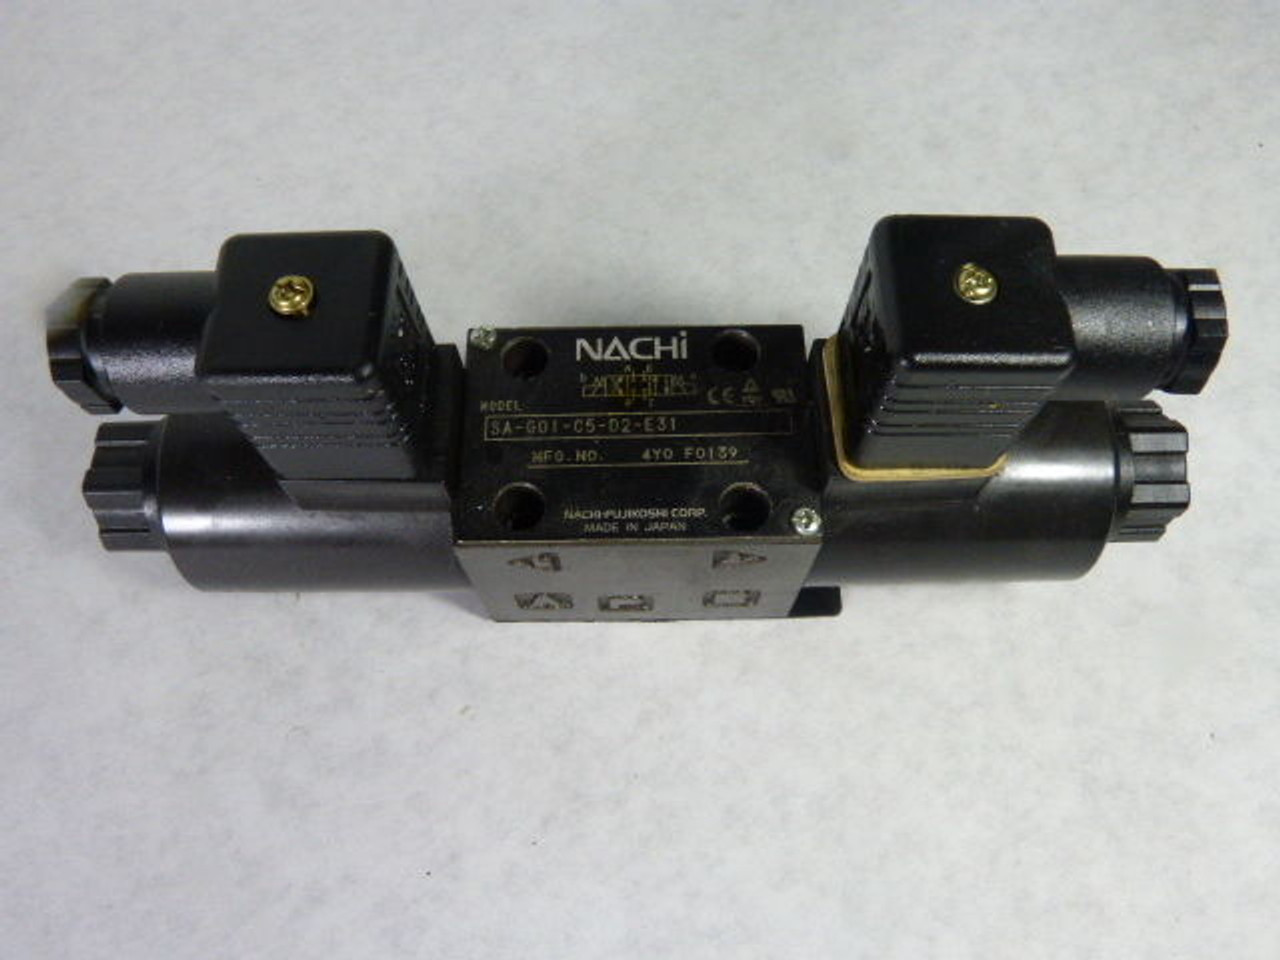 Nachi SA-G01-C5-02-E31 Directional Control Valve USED